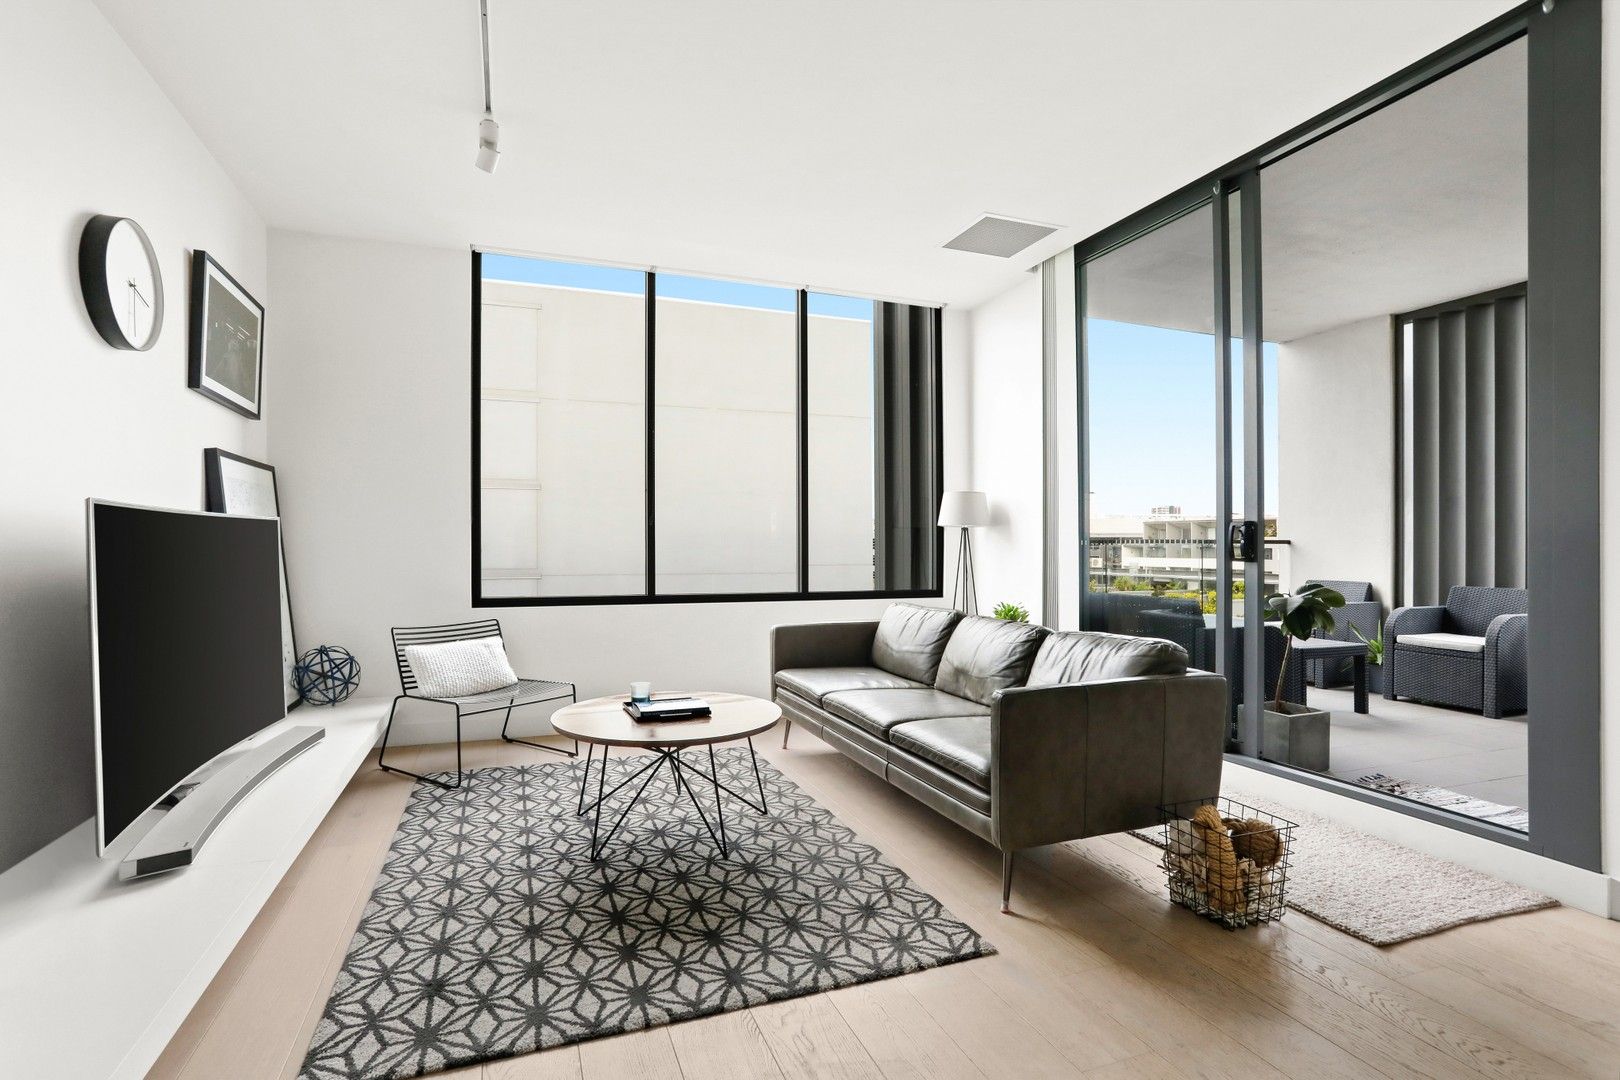 2 bedrooms House in D435/810 Elizabeth Street WATERLOO NSW, 2017